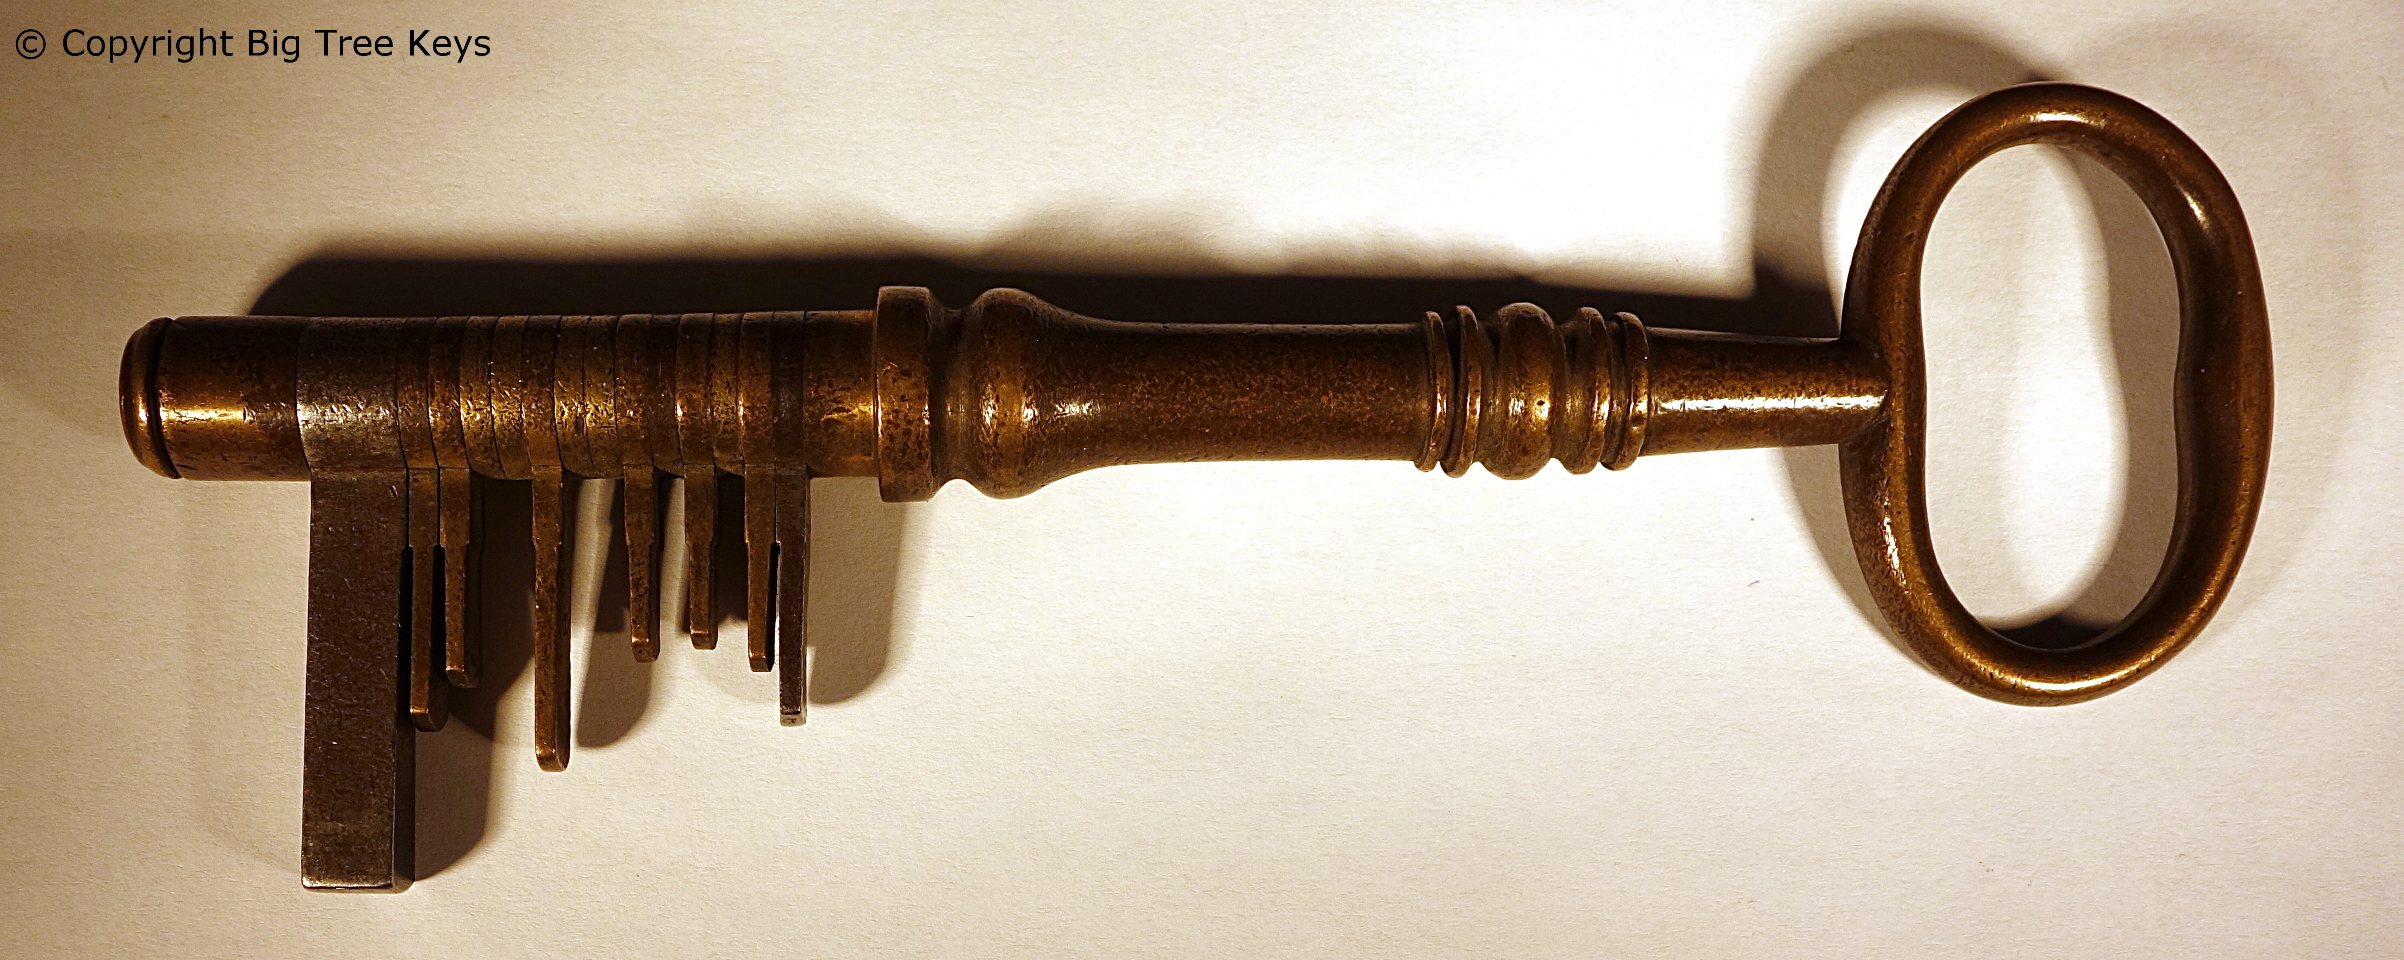 Big Tree Keys - Collection of Antique Keys and Locks